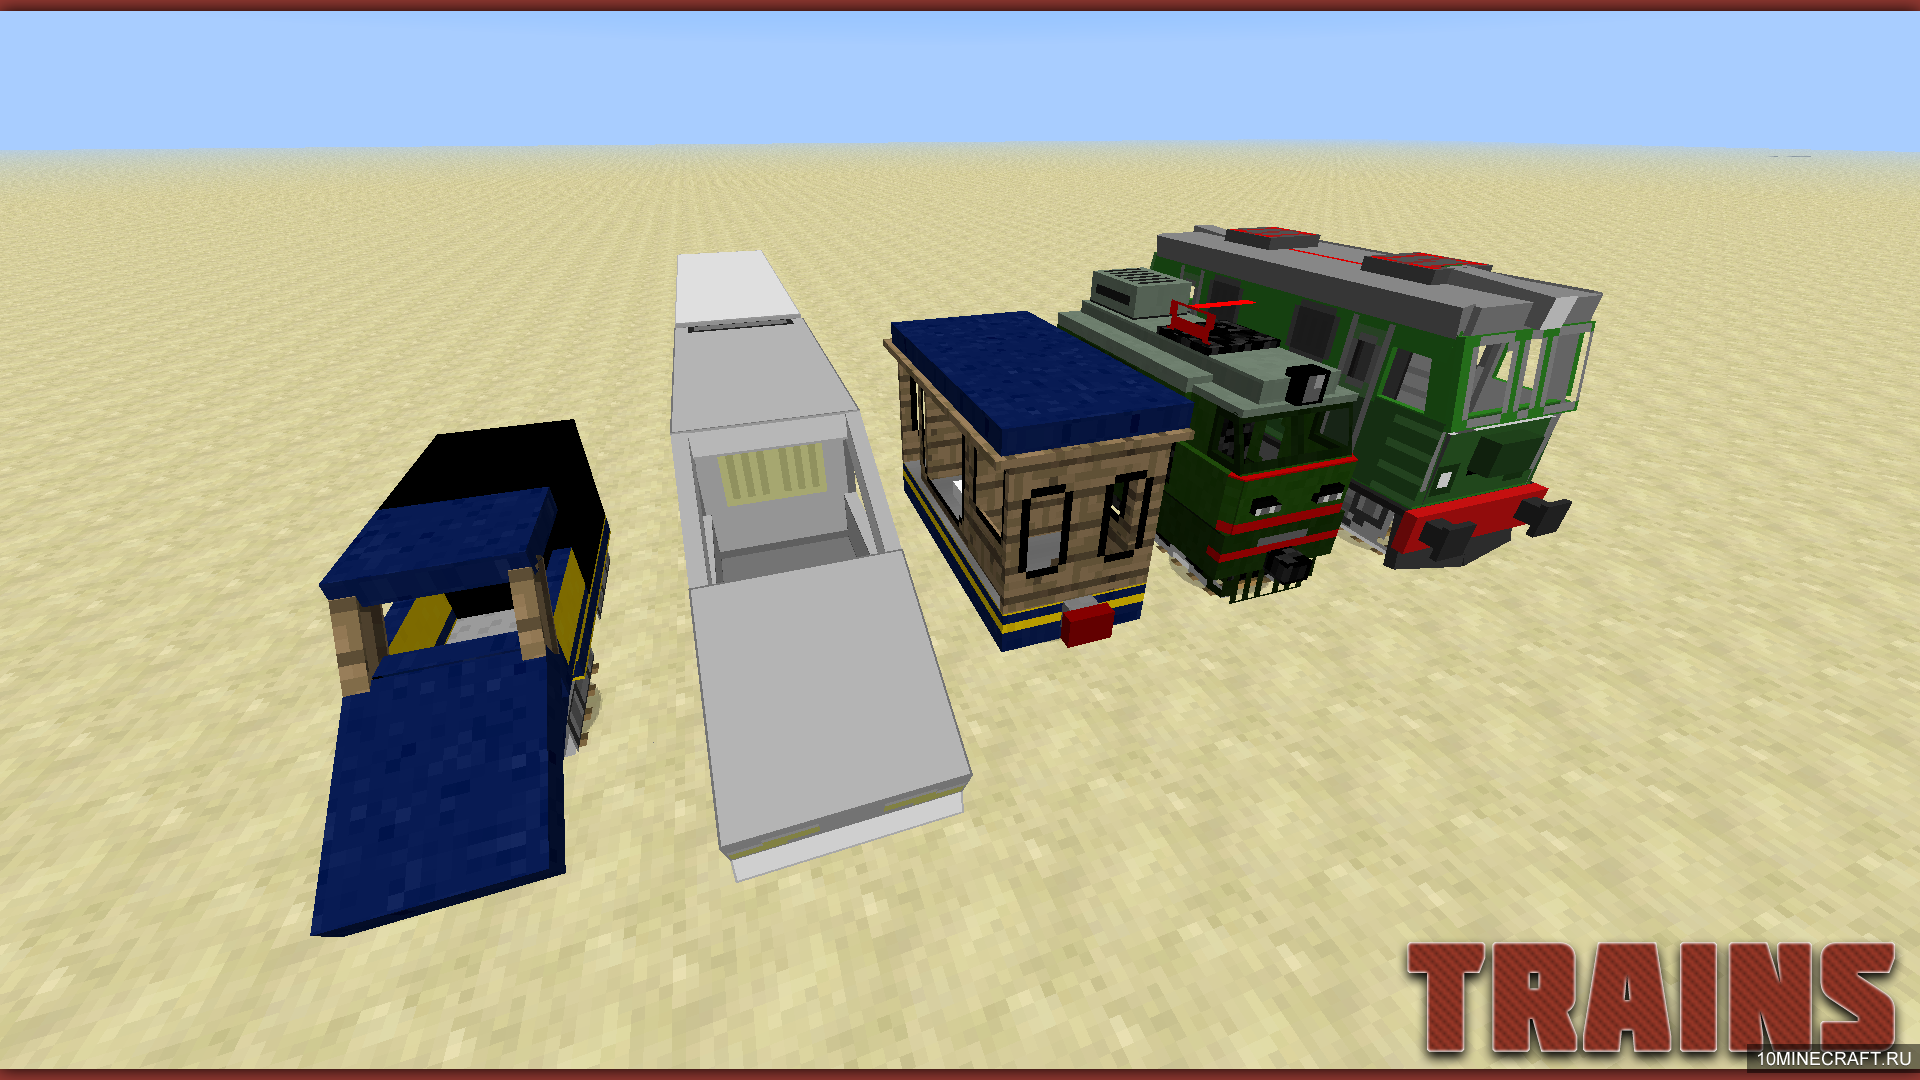 Traincraft 4.2.1. - Minecraft Mods - Mapping and Modding ...